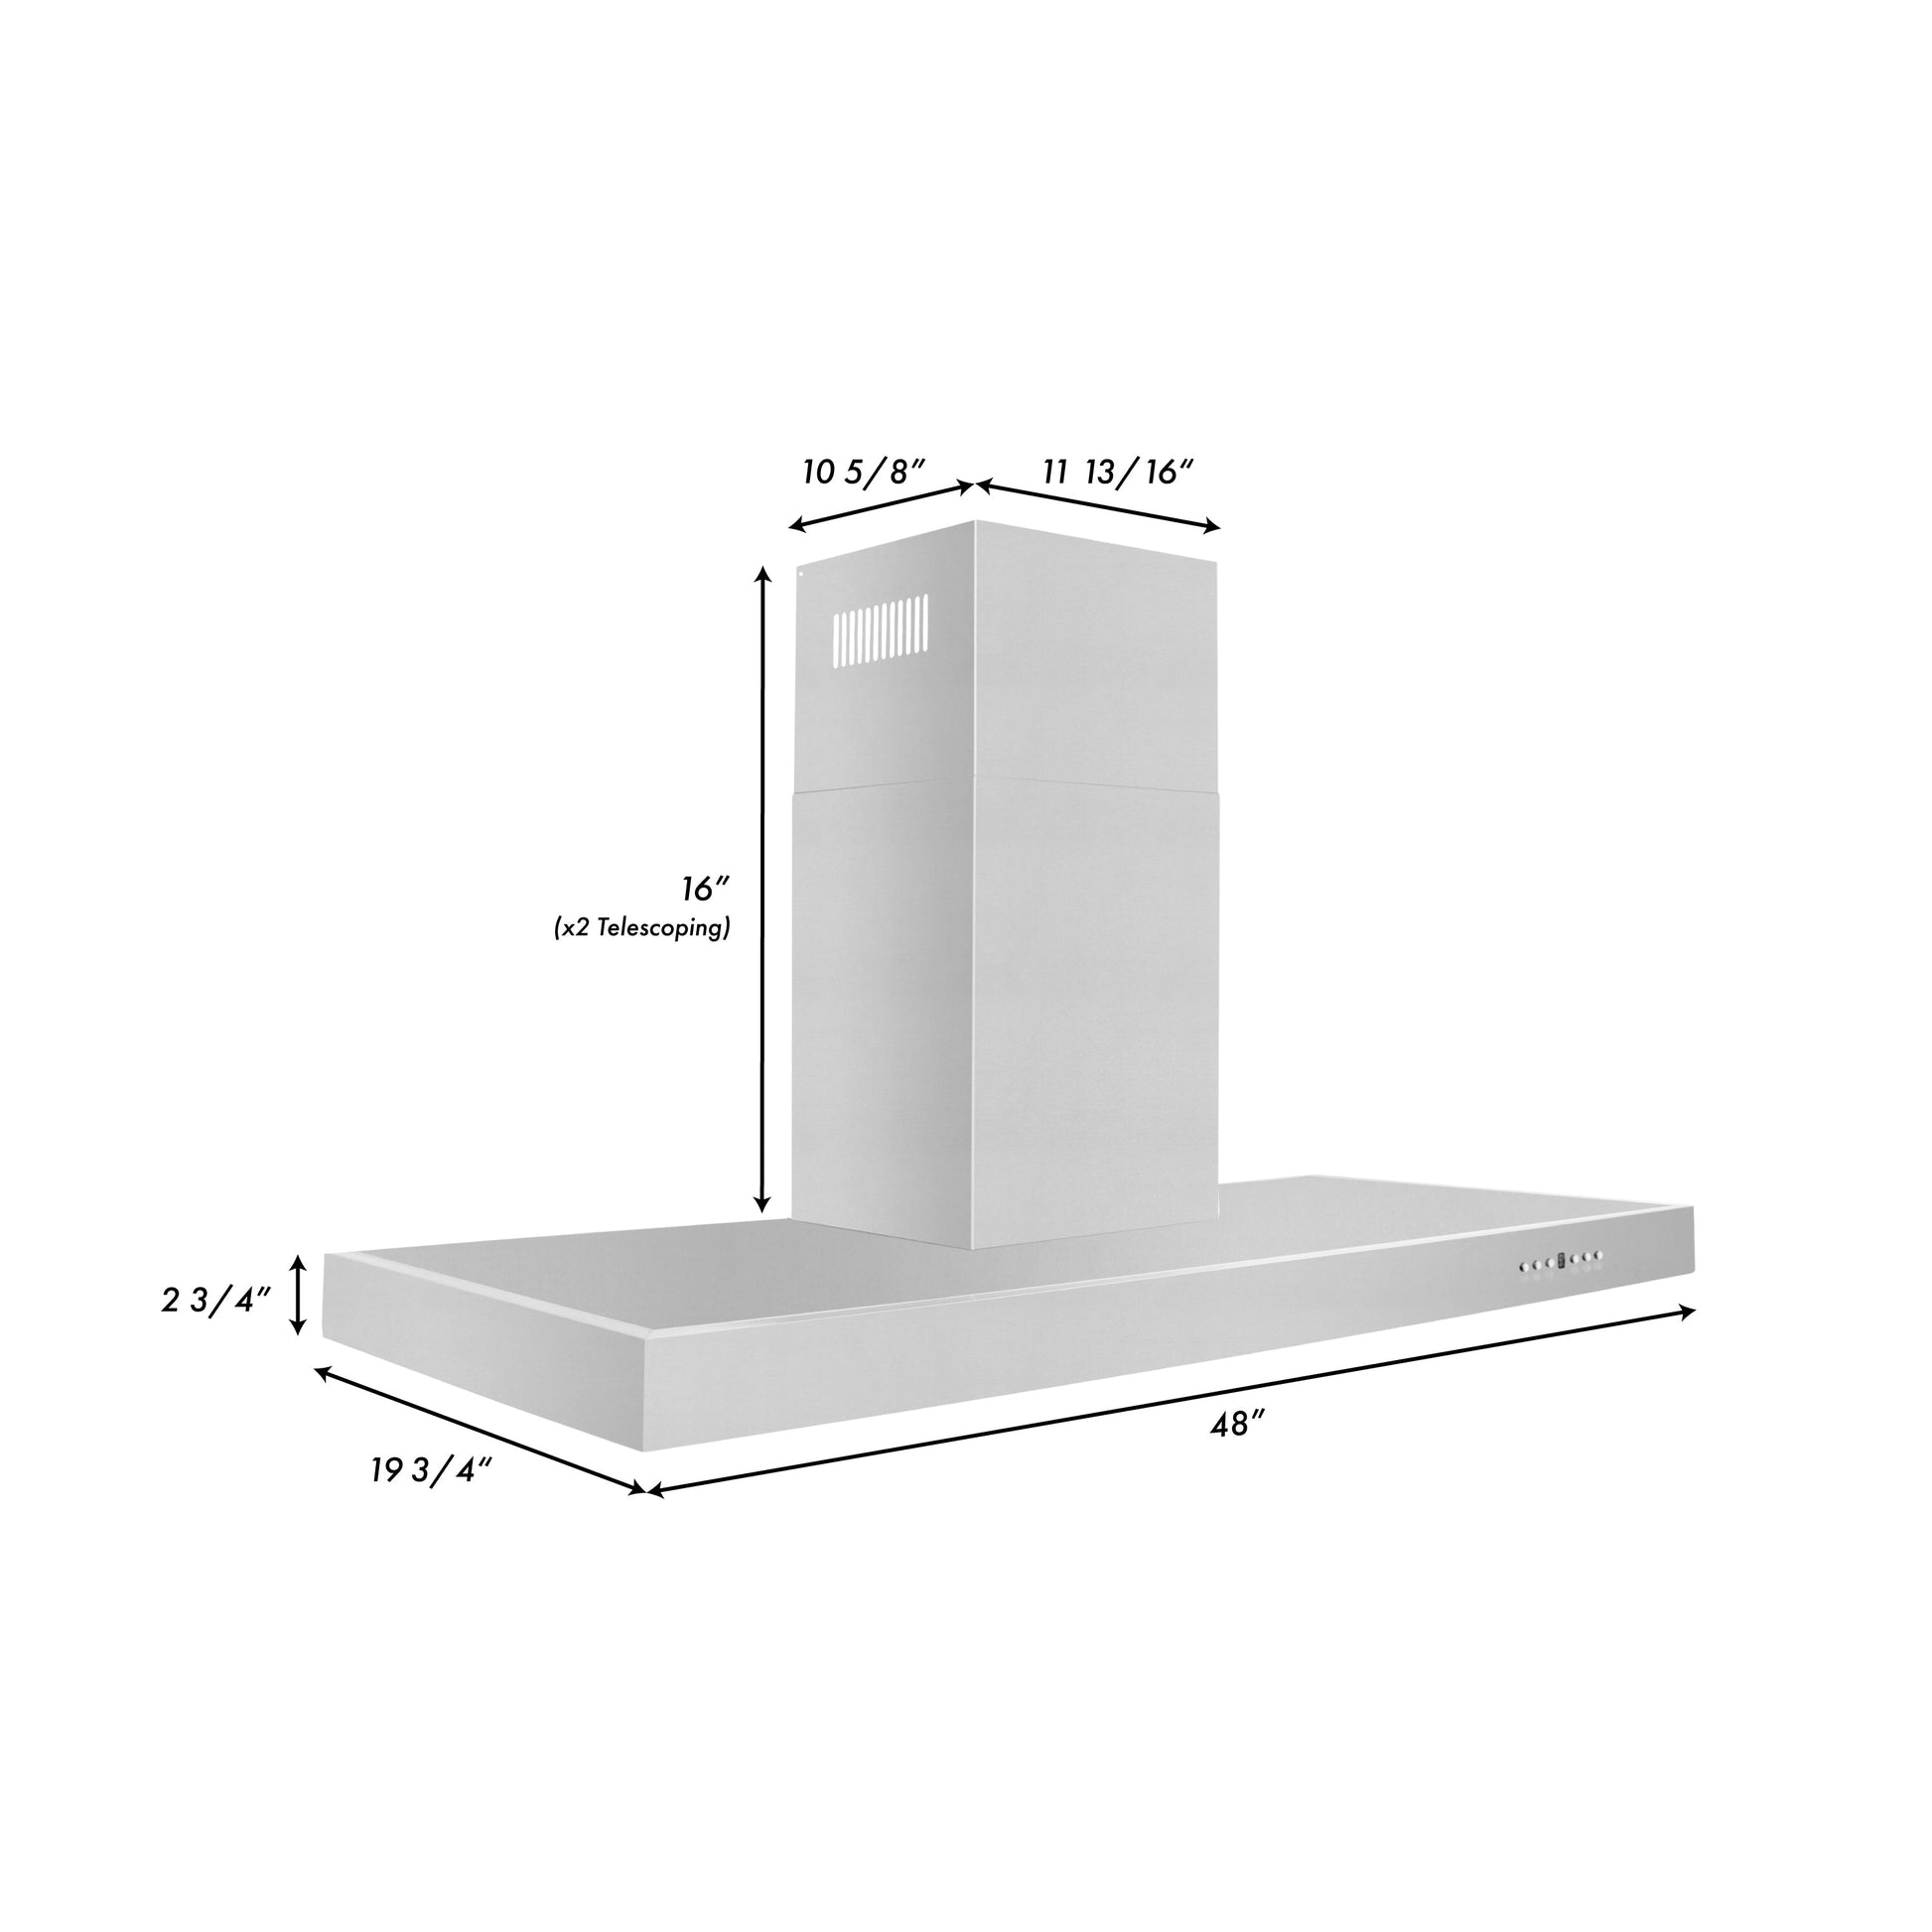 ZLINE Convertible Vent Wall Mount Range Hood in Stainless Steel (KE) dimensional diagram with measurements.